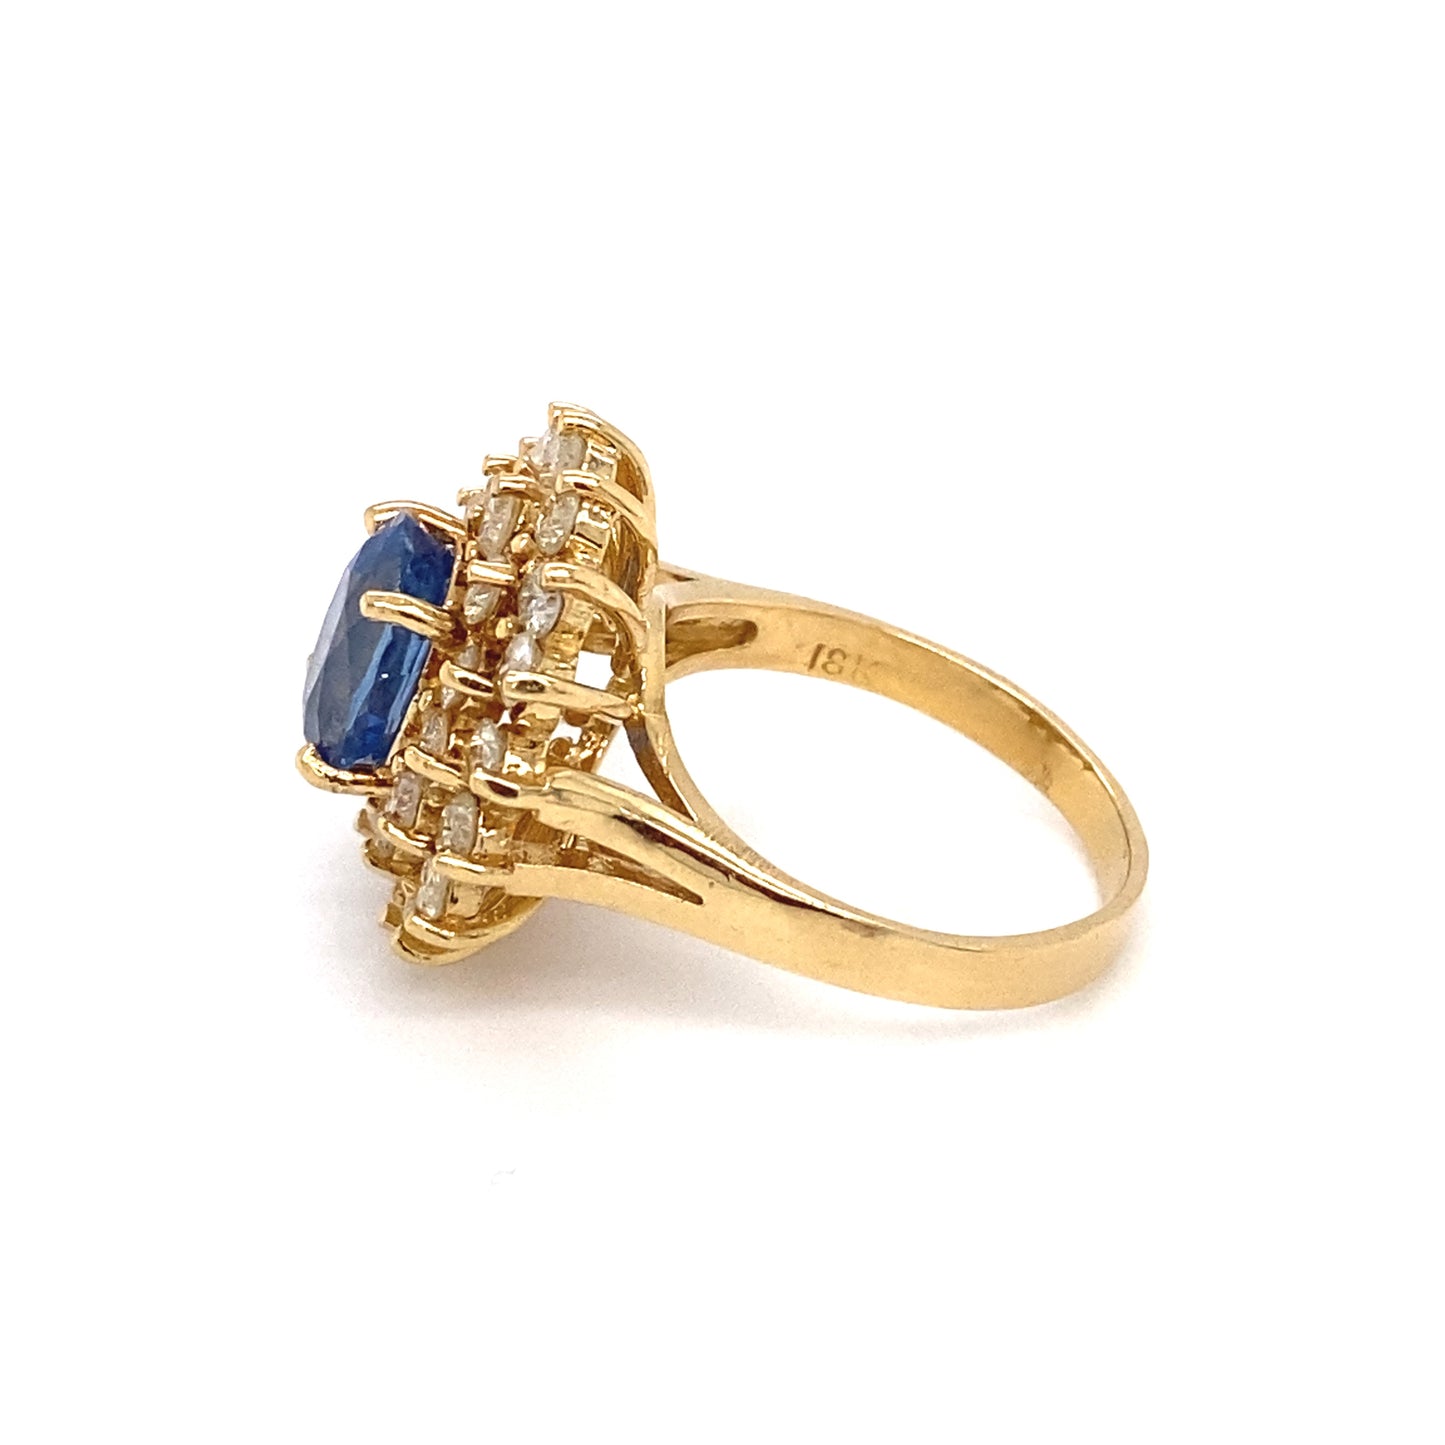 2.5 Carat Ceylon Sapphire and Diamond Double Halo Ring